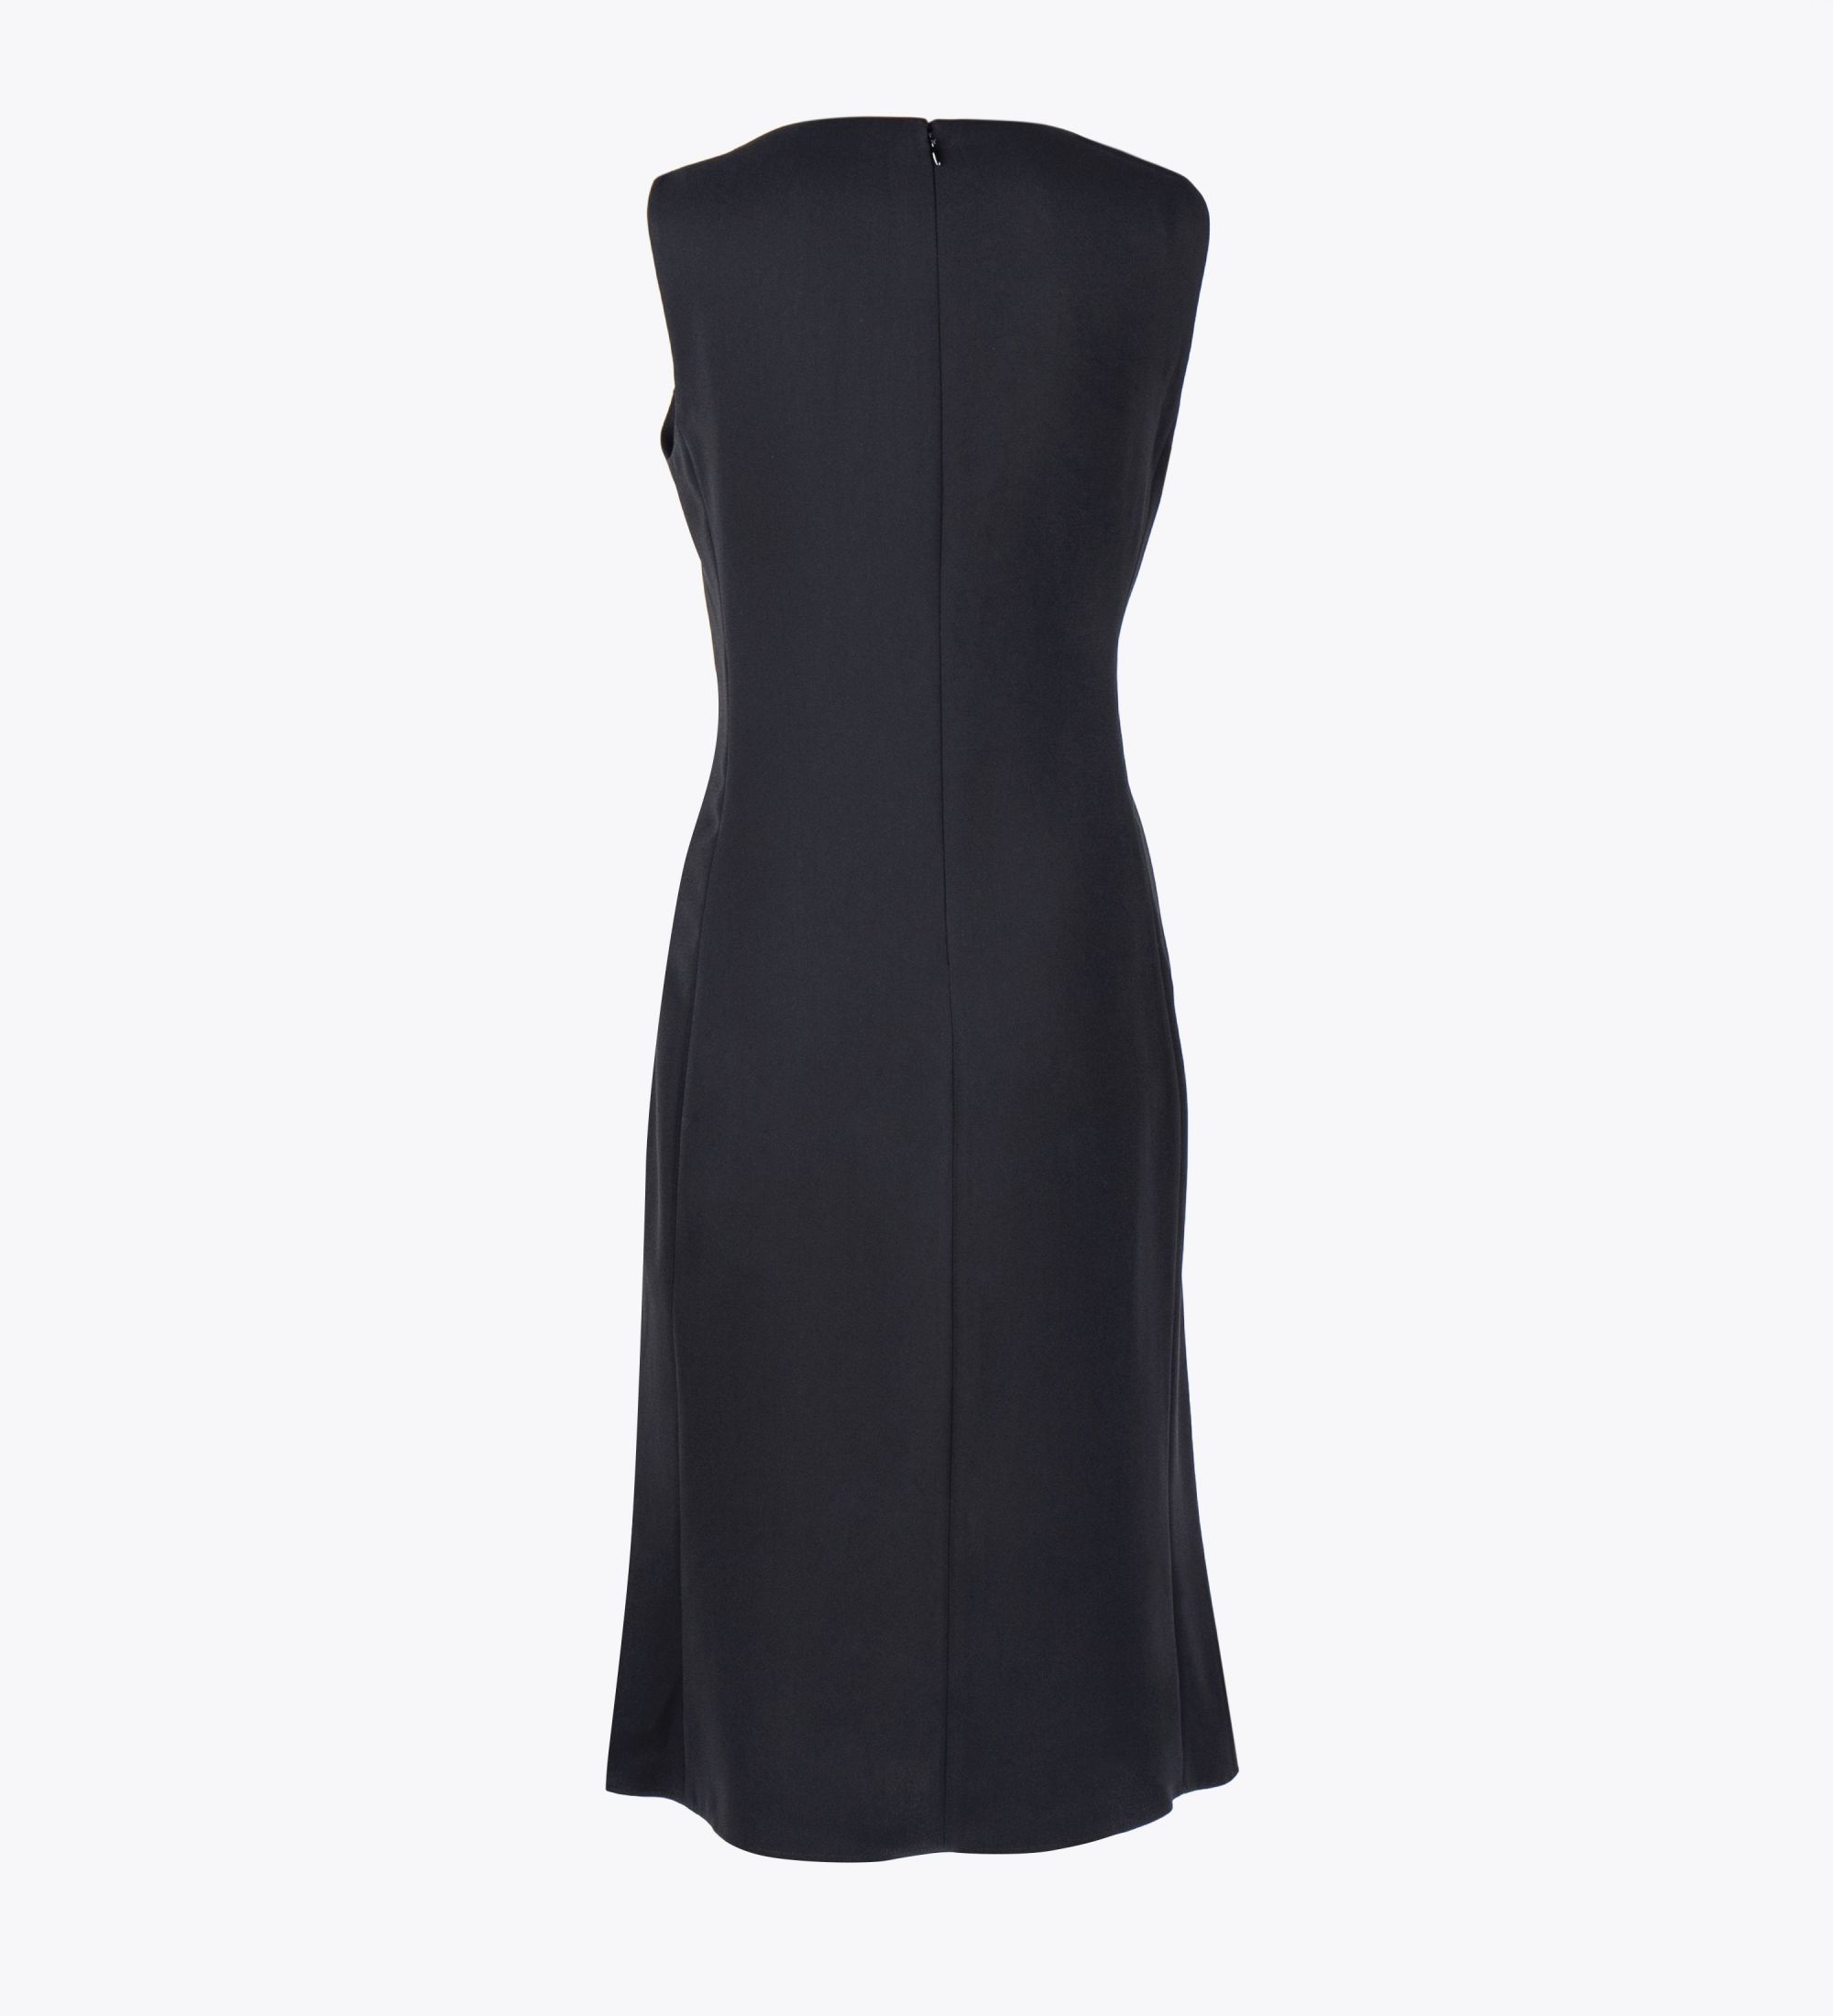 LEEZ Women Sleeveless Fishtail Dress - Black